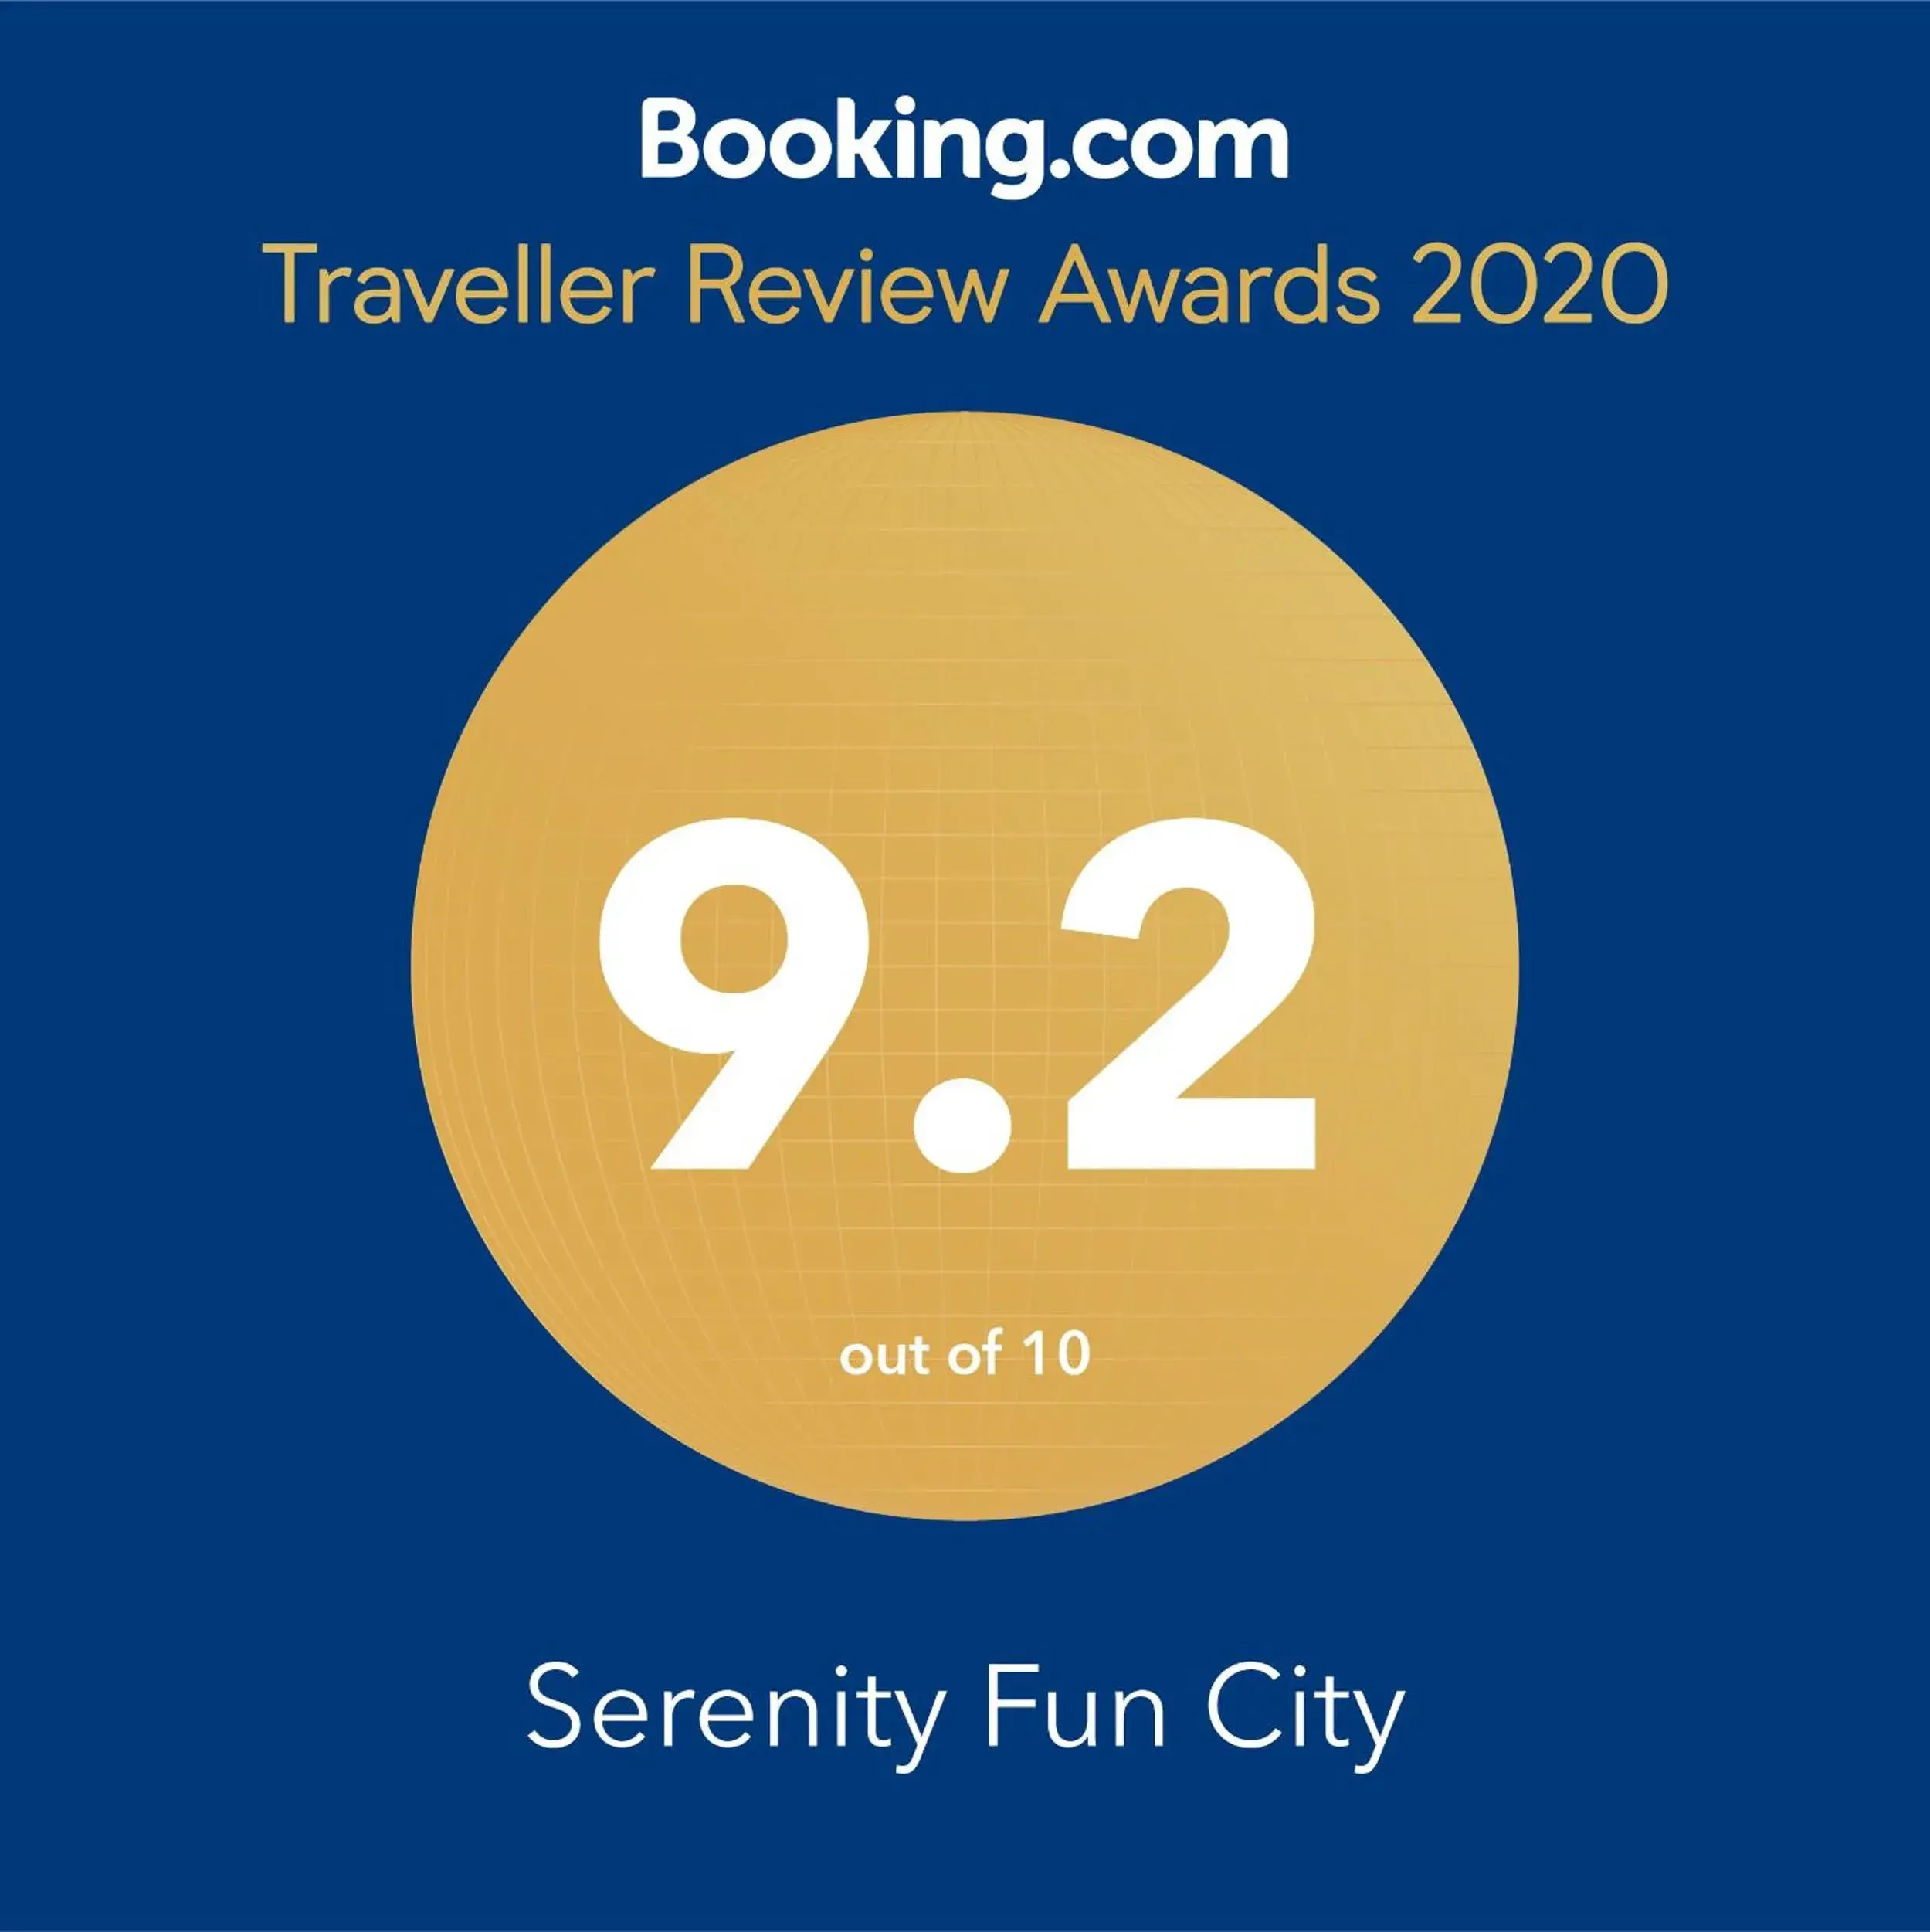 Certificate/Award in Serenity Fun City